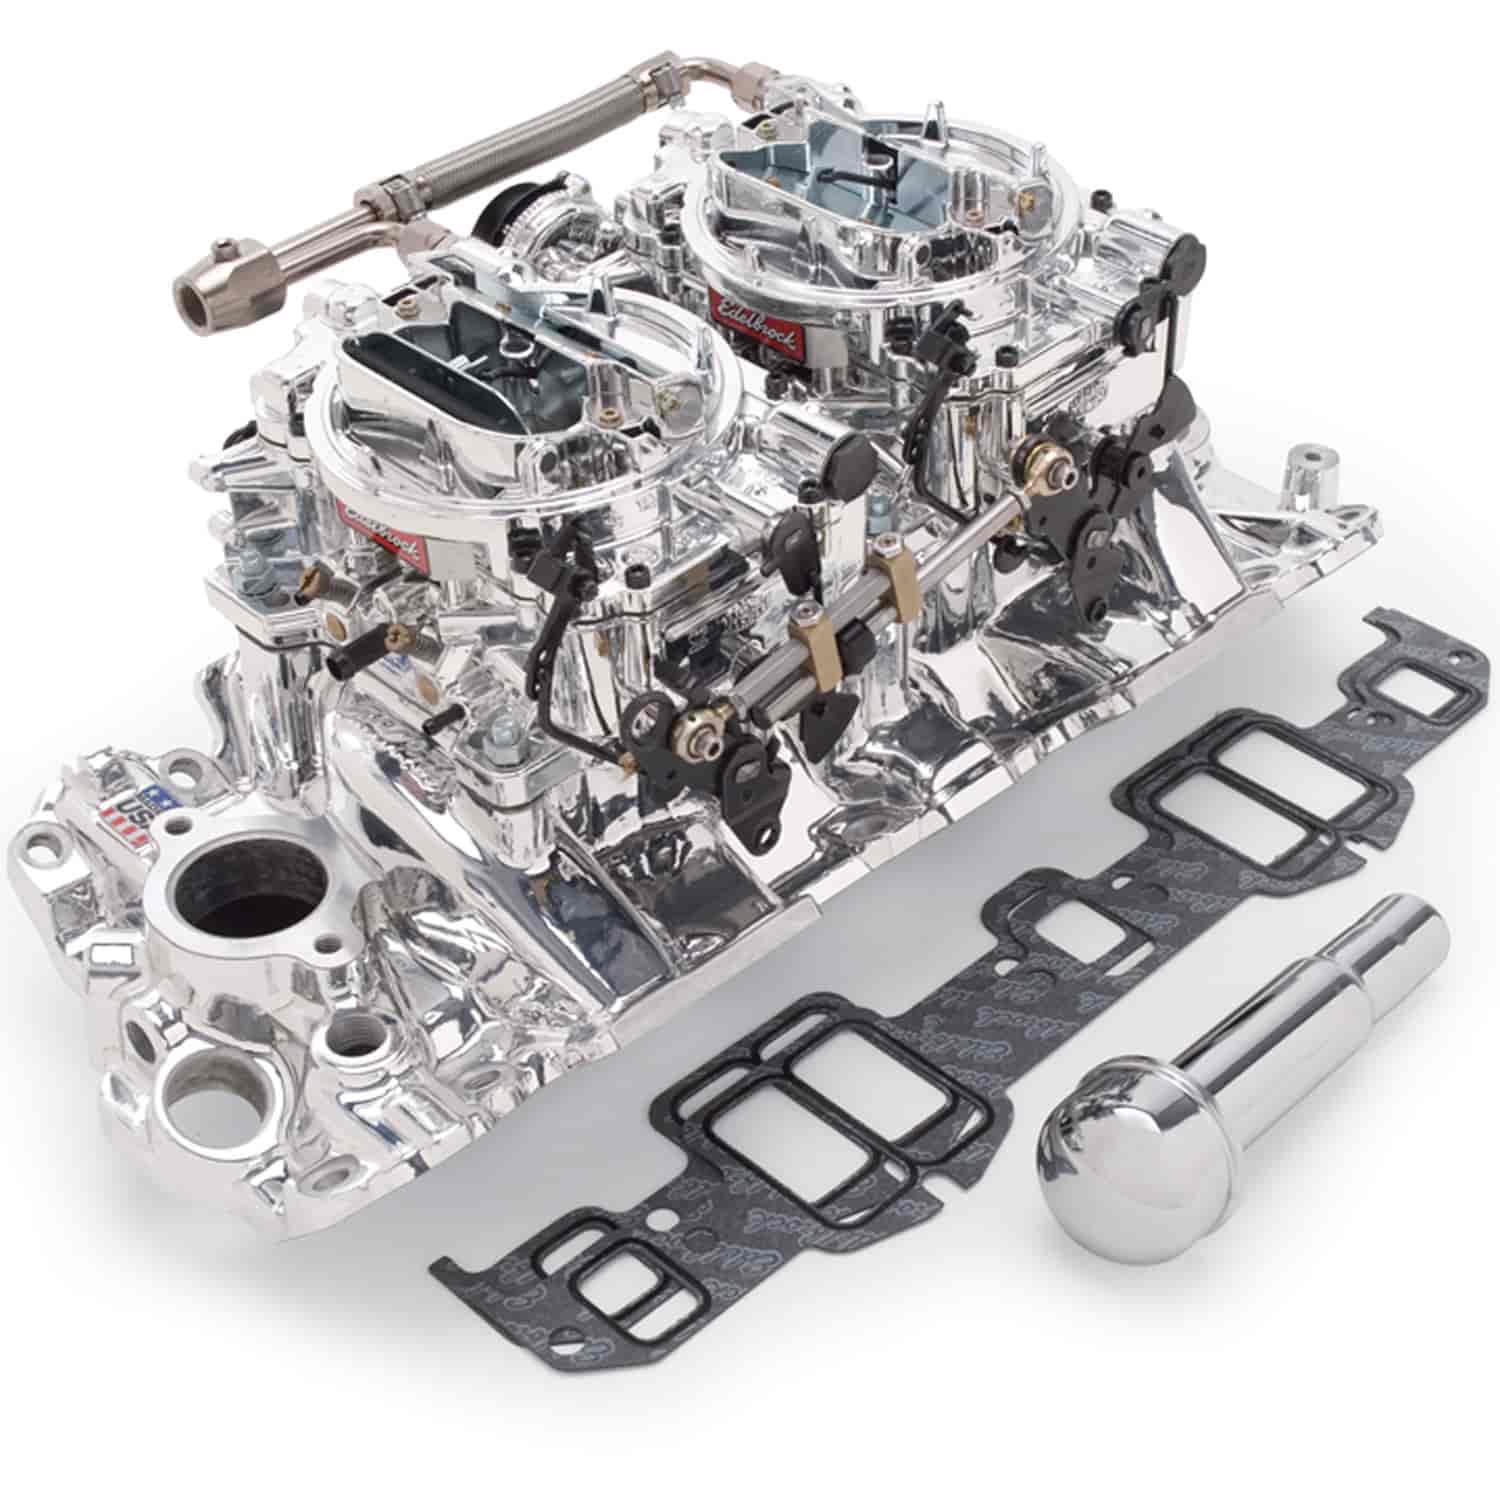 RPM Dual-Quad Manifold and Carburetor Kit for Chevy W-Series 348/409 Small Port with Endurashine Finish